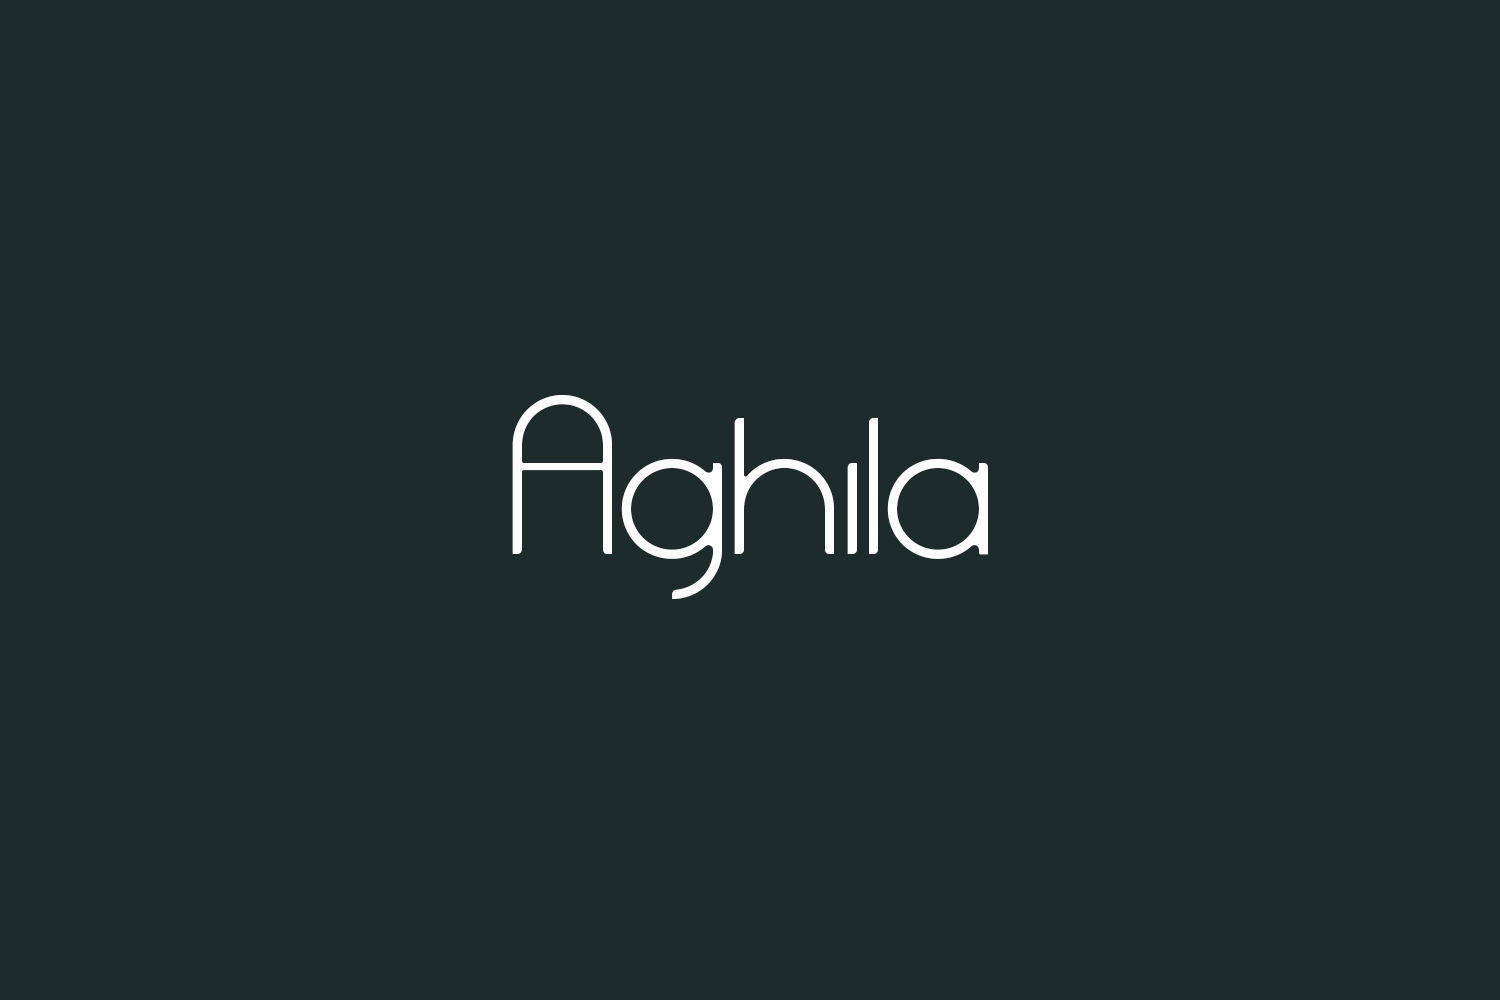 Aghila Free Font